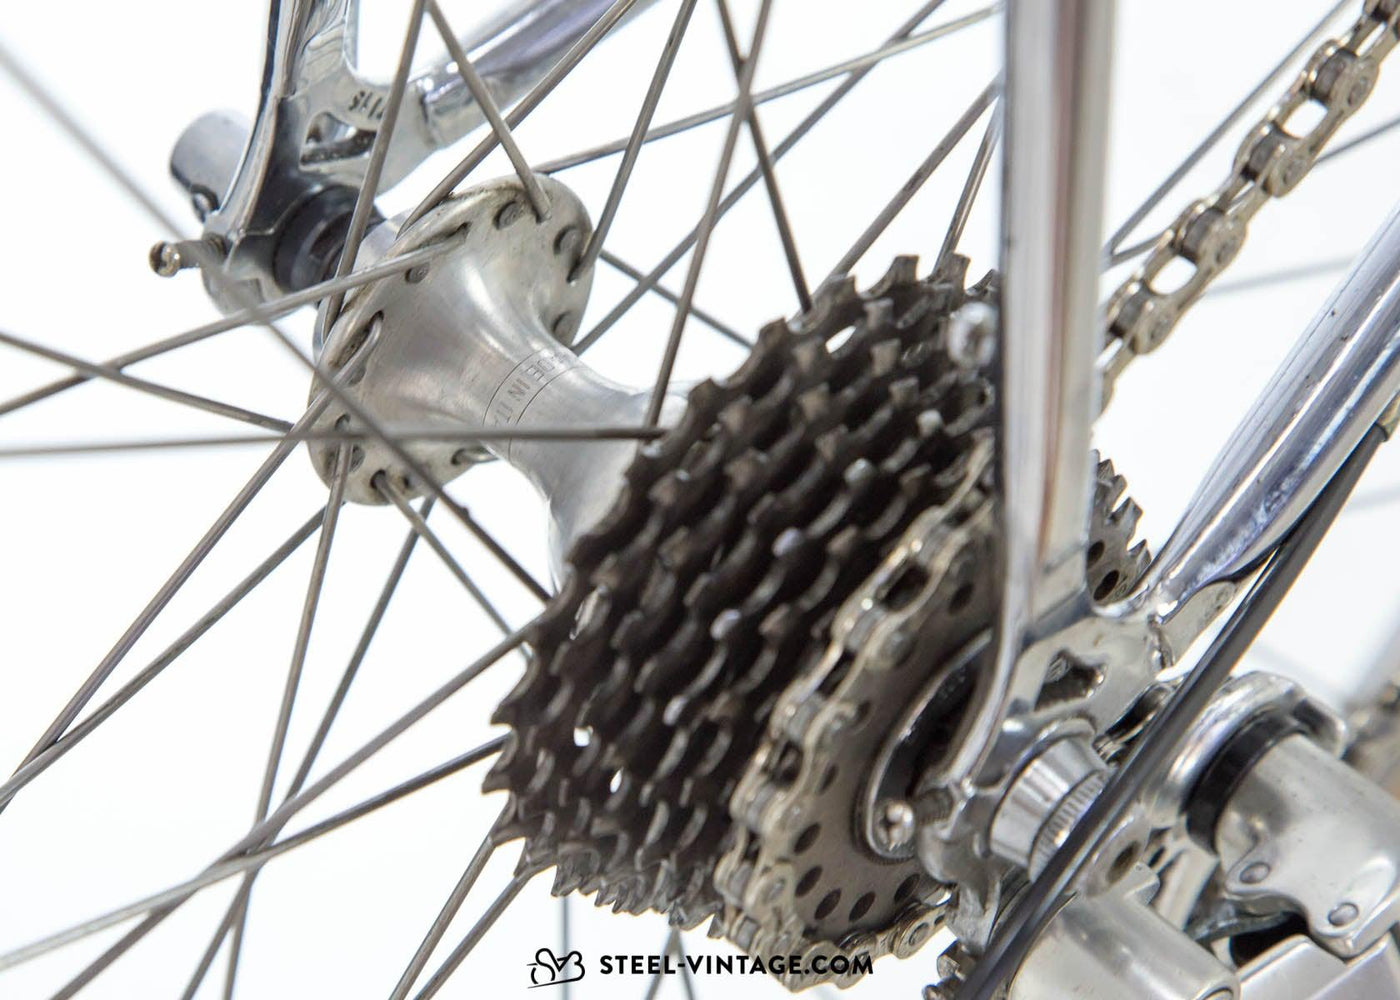 Francesco Moser Forma Steel Road Bike 1990s - Steel Vintage Bikes